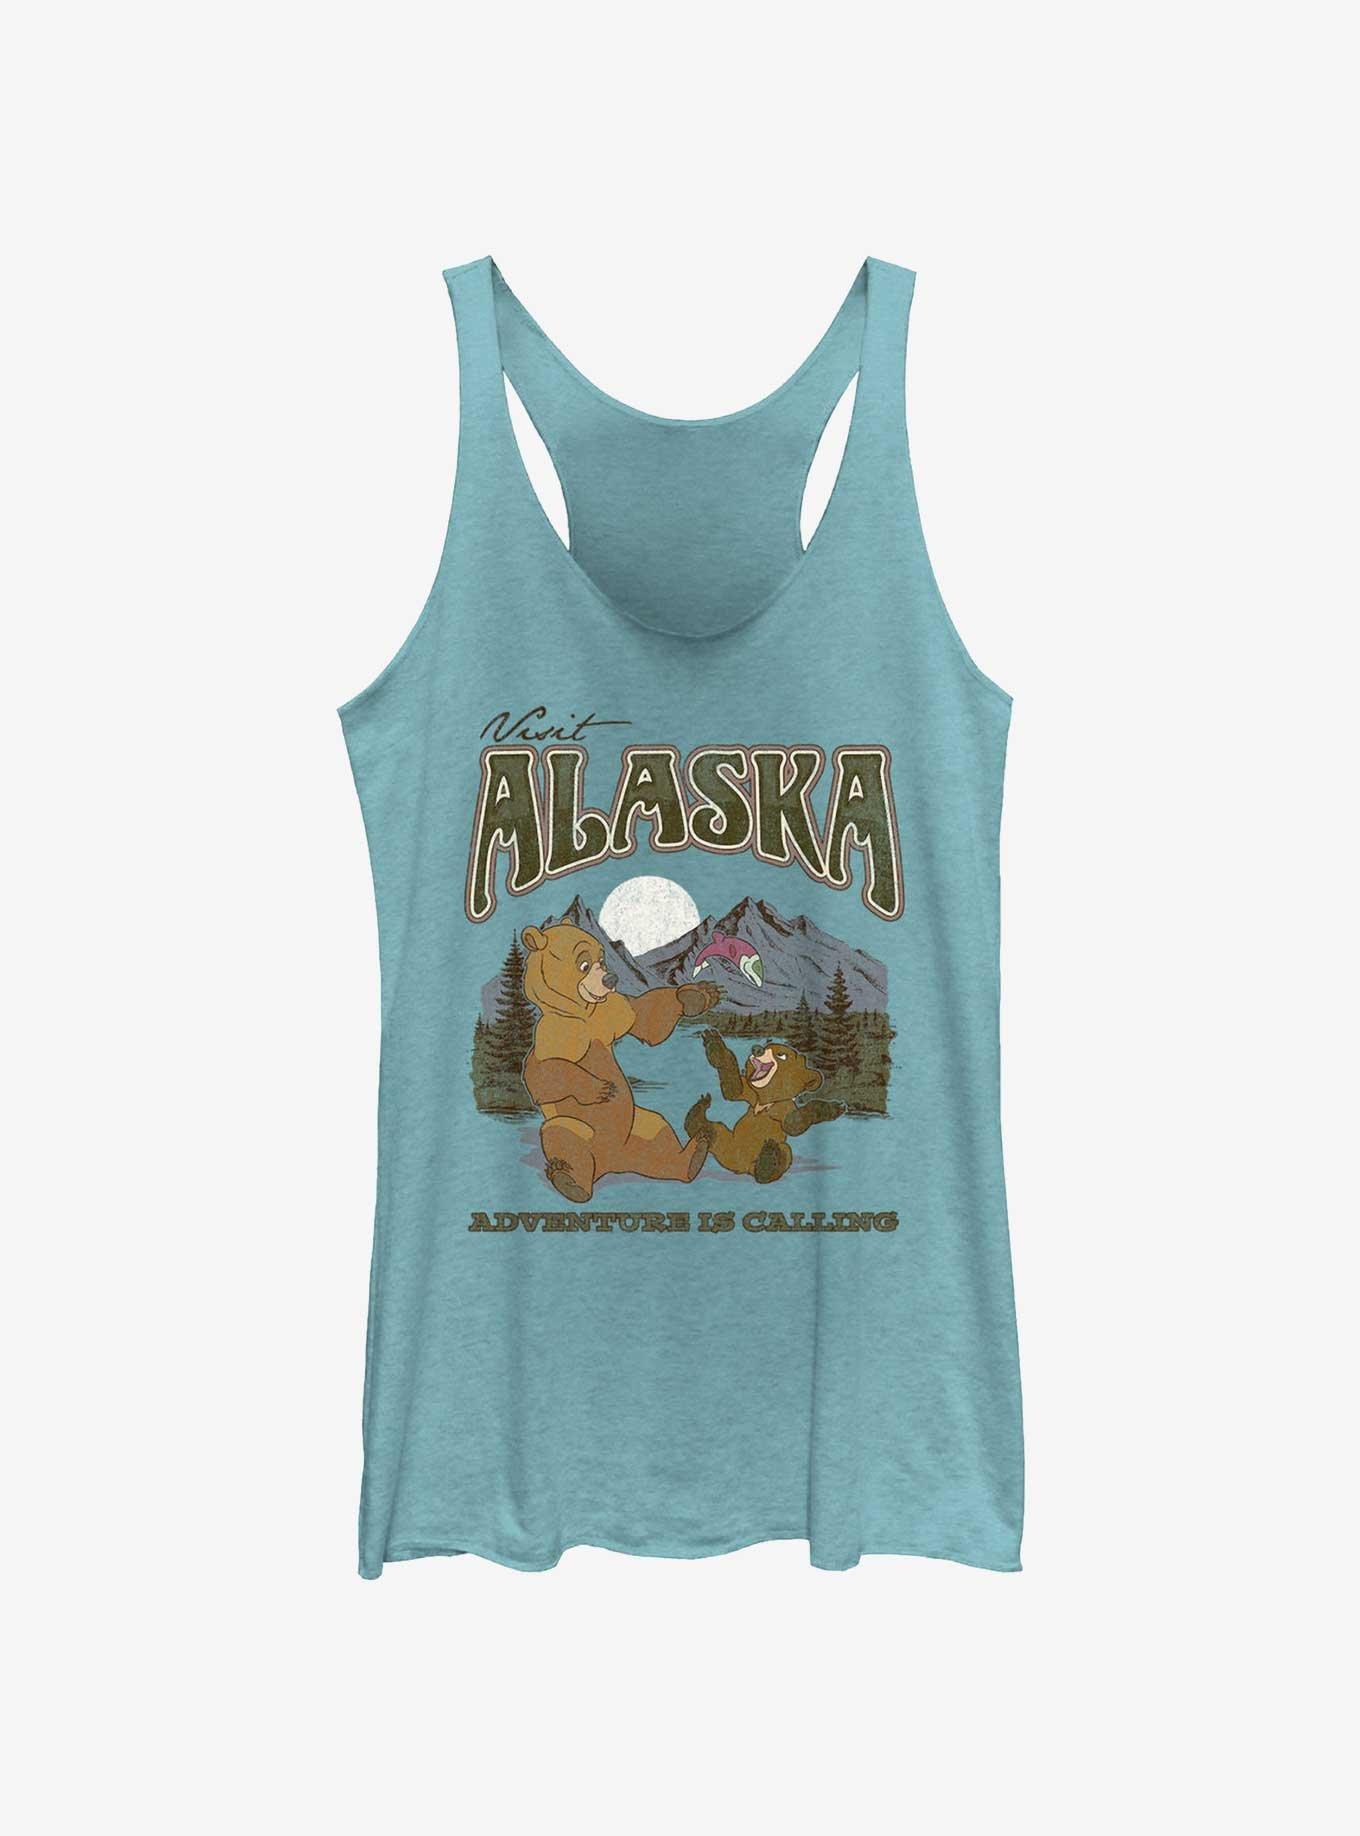 Disney Brother Bear Visit Alaska Adventure Is Calling Girls Tank